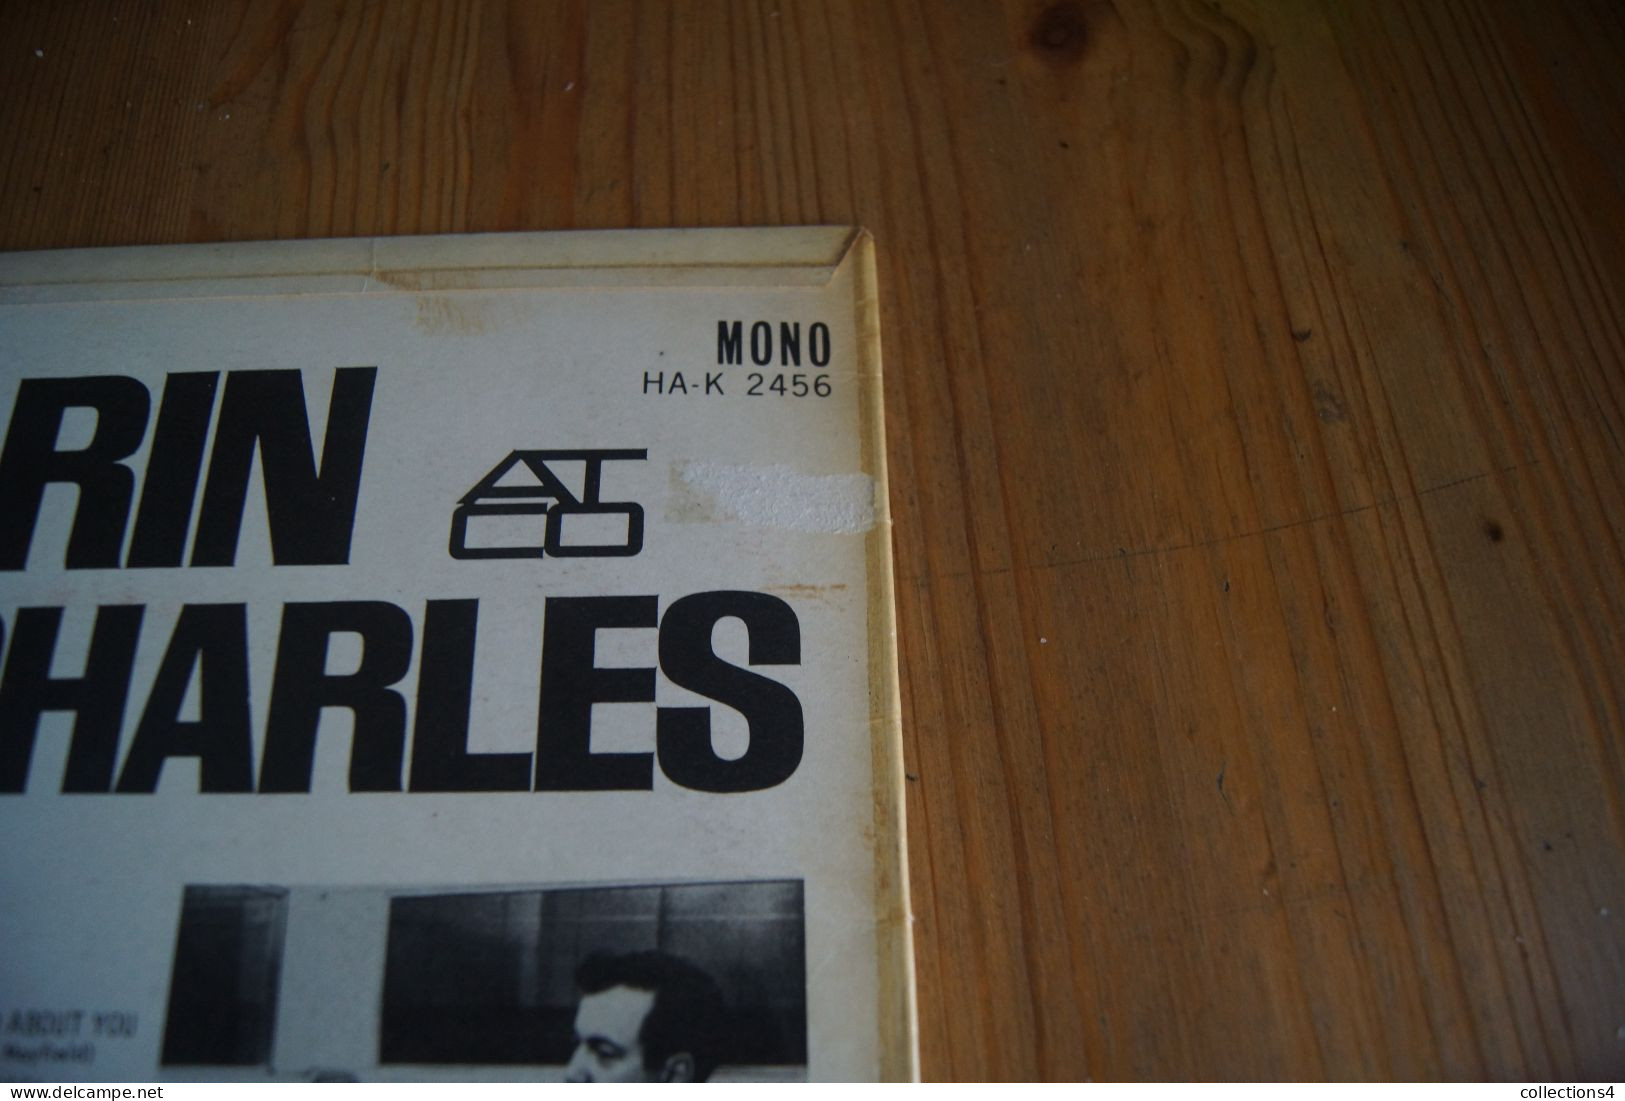 BOBBY DARIN SINGS RAY CHARLES RARE LP ORIGINAL ANGLAIS 1962 - Andere - Engelstalig